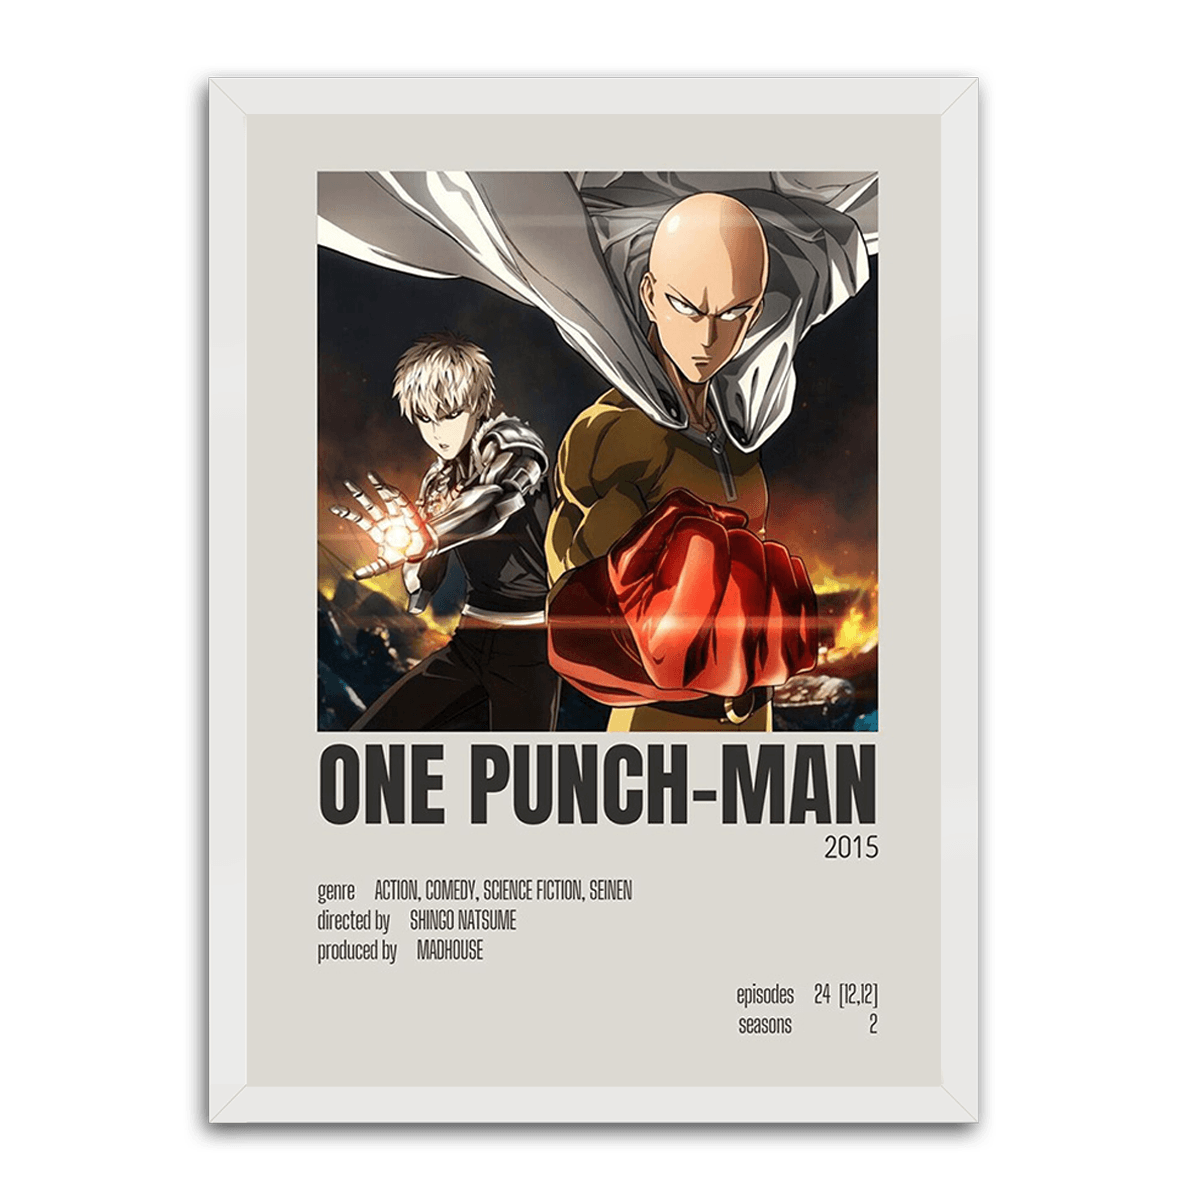 One Punch-Man - PixMagic